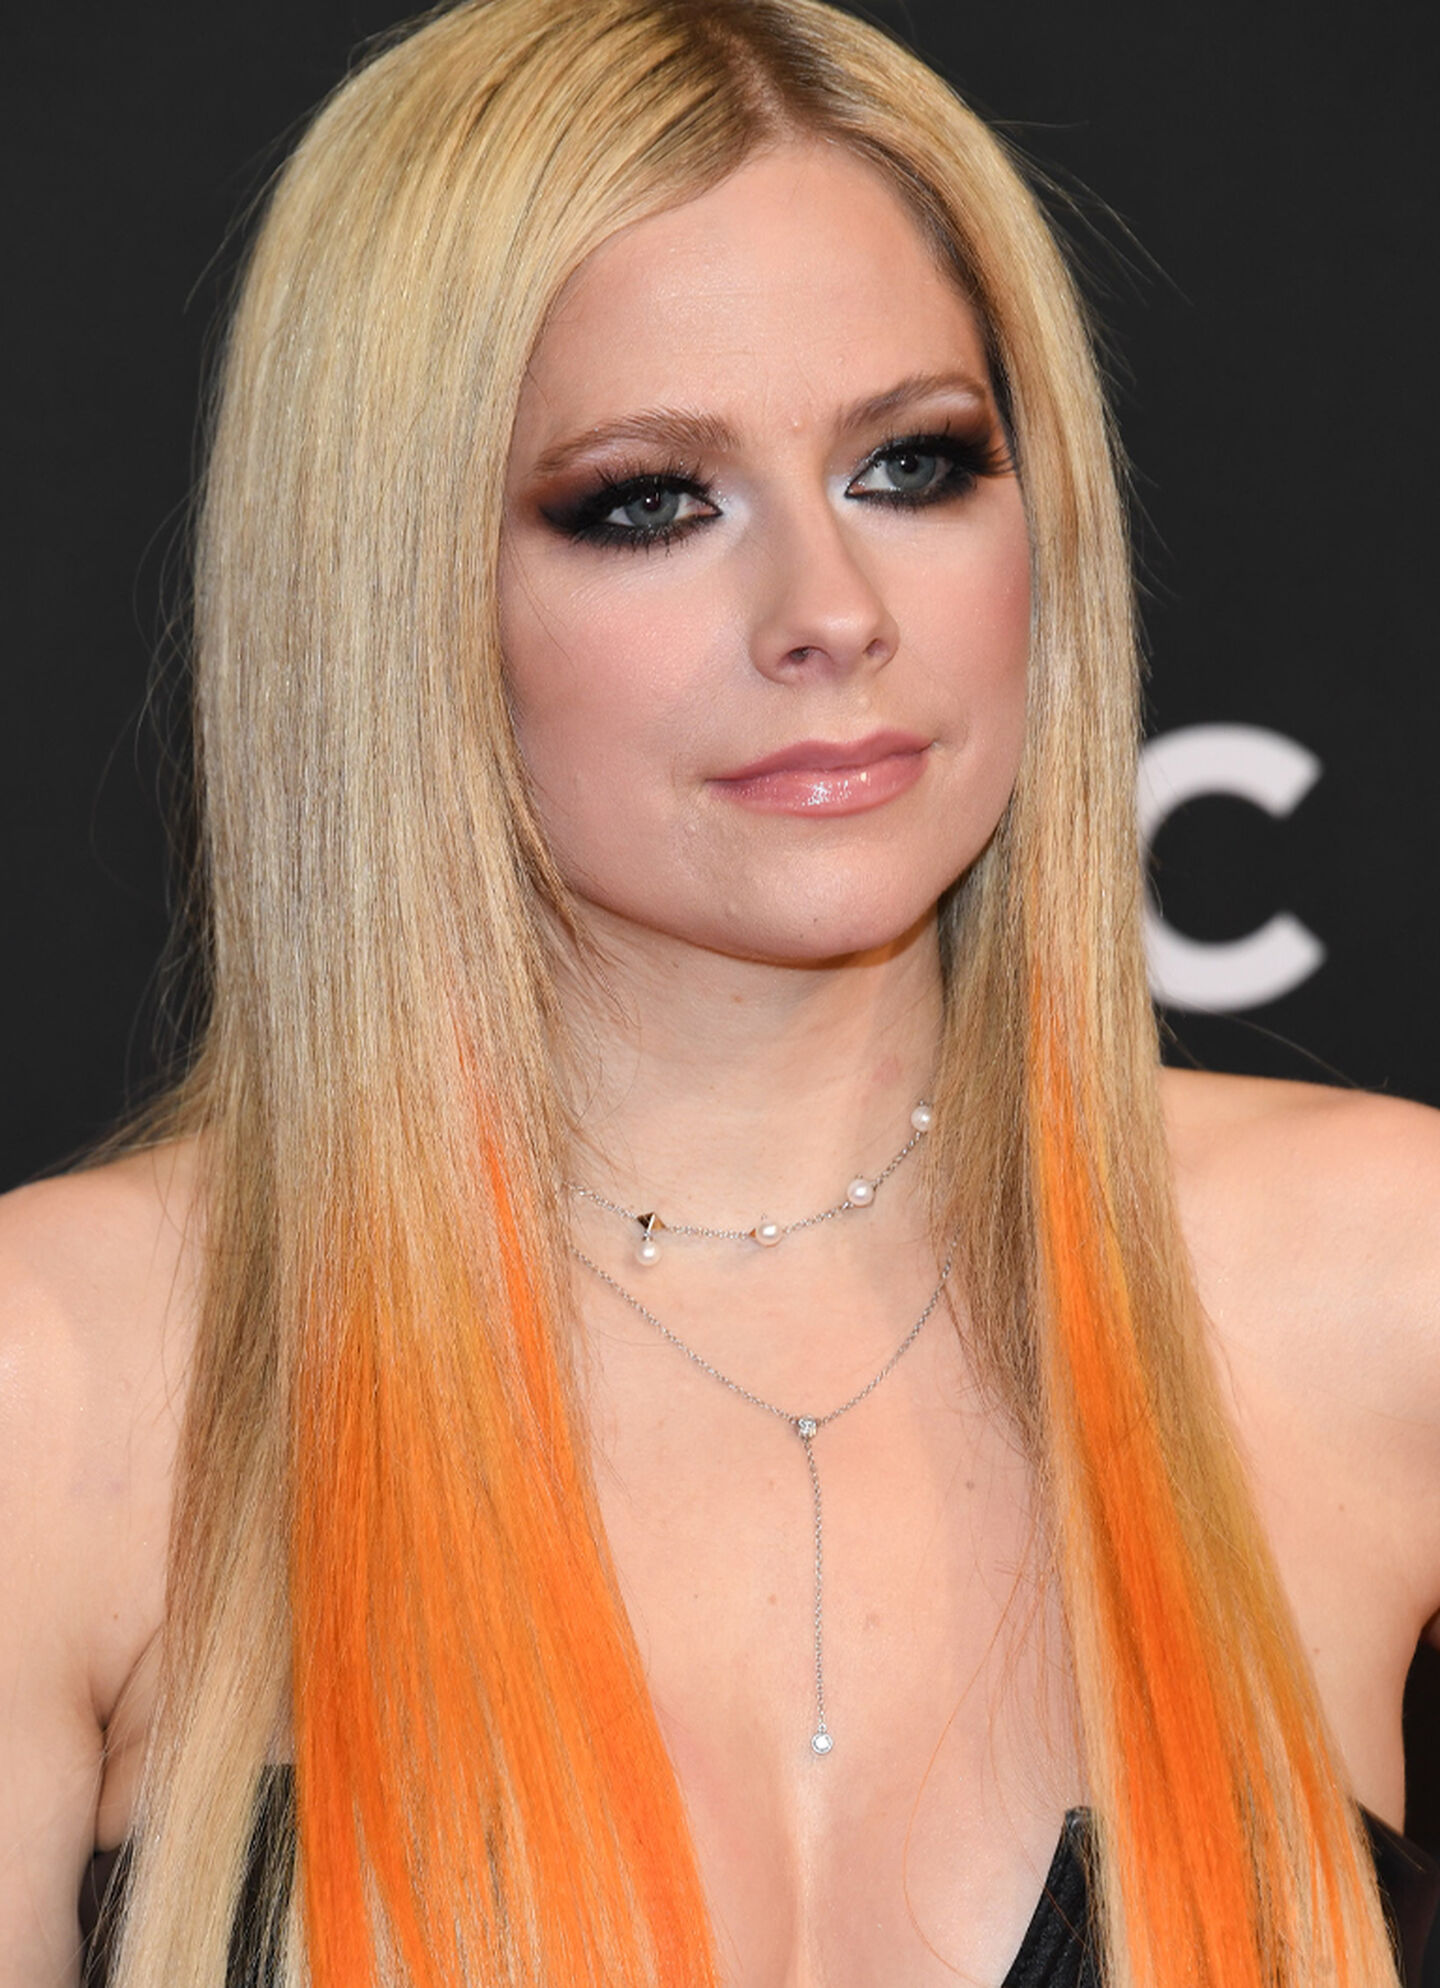 Avril Lavigne wearing Birks jewelry.